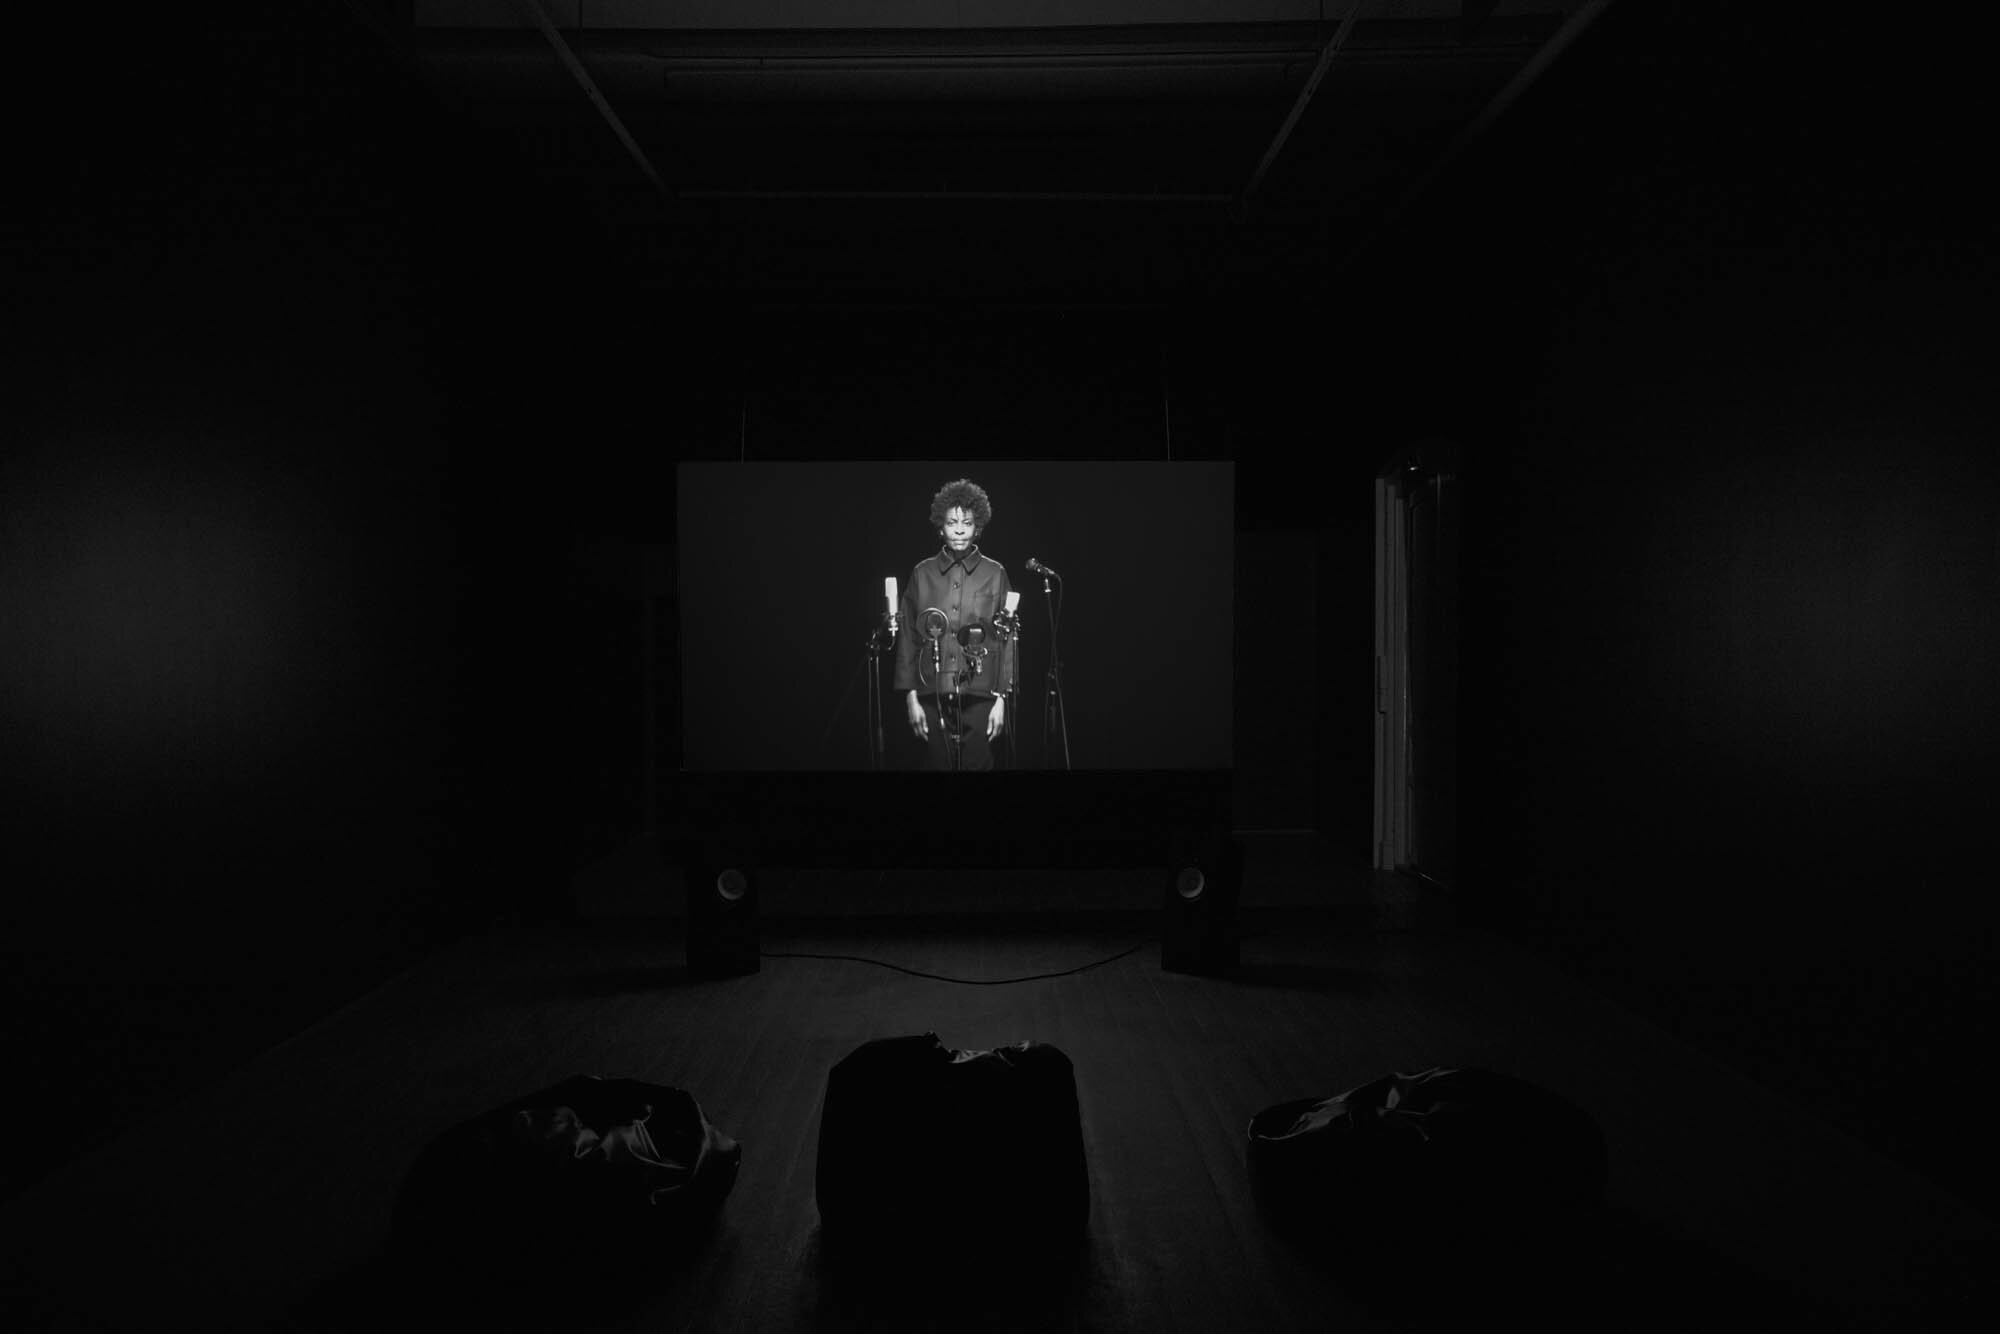  Anouk De Clercq,  ONE  (2020) 4K transcoded video to HD, b/w, 16:9, stereo, English, 6 min. Image courtesy of the artists and Tromsø Kunstforening. Photo: Vsevolod Kovalevskij. 